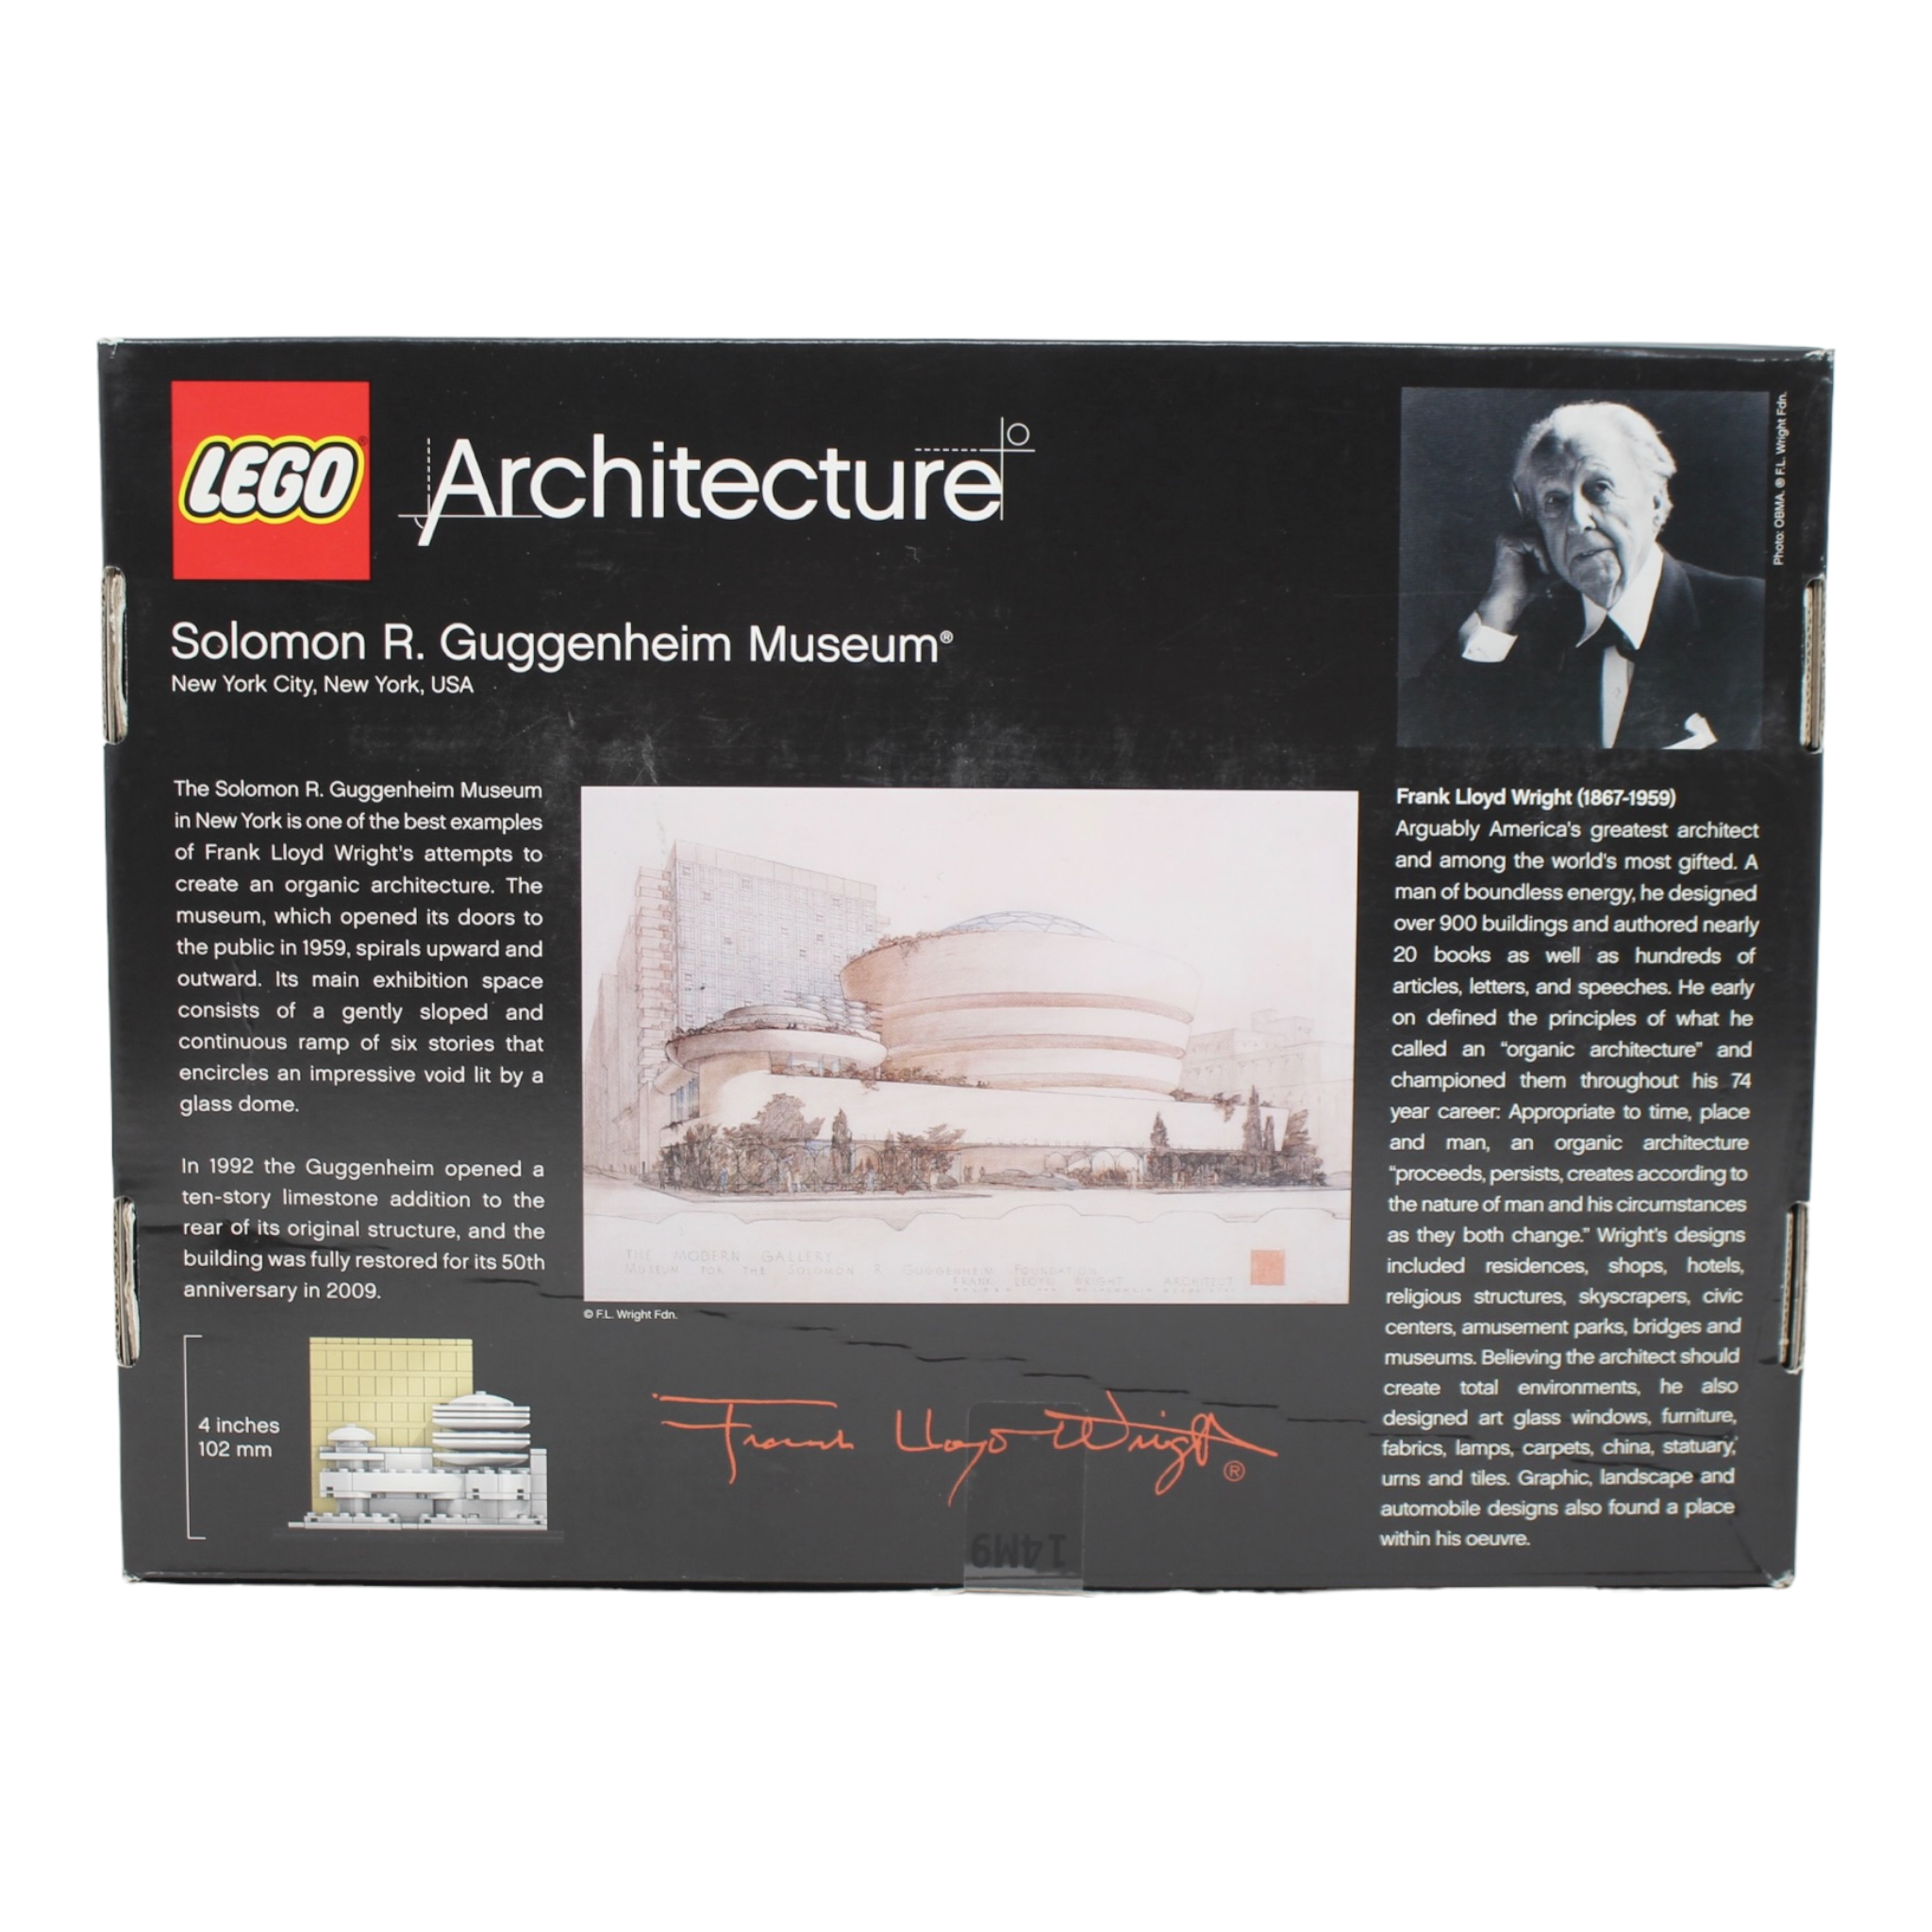 Retired Set 21004 Architecture Solomon R. Guggenheim Museum (signed)